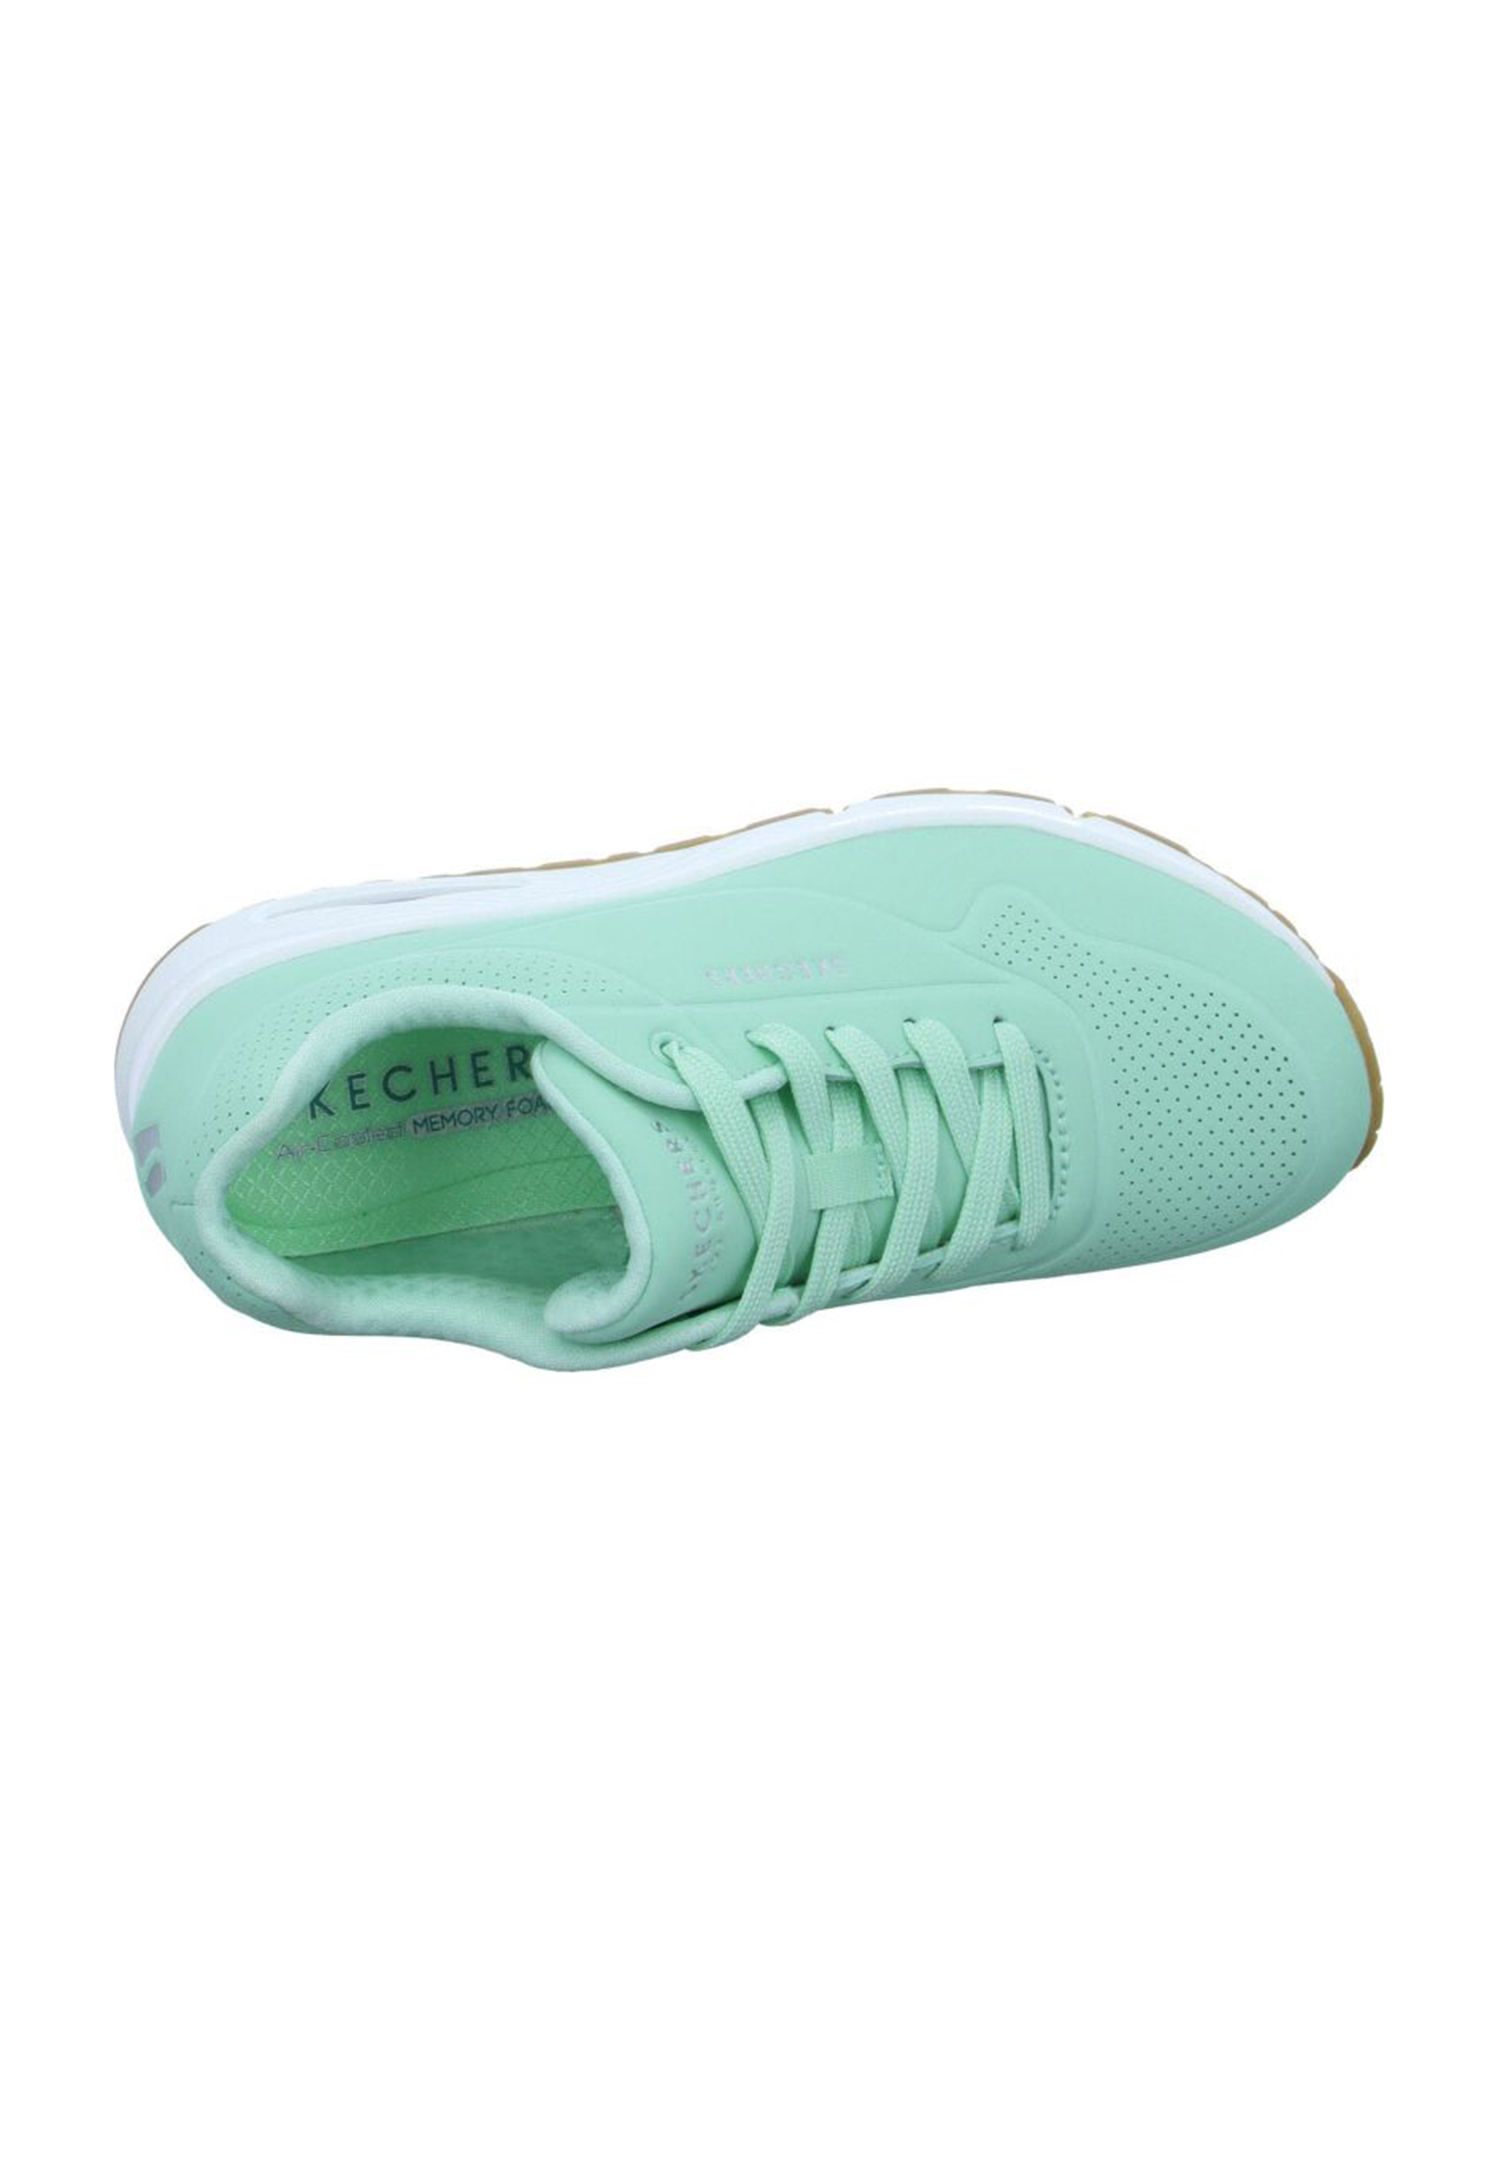 Skecher Street Uno -STAND ON AIR Damen Sneaker 73690 MNT mint